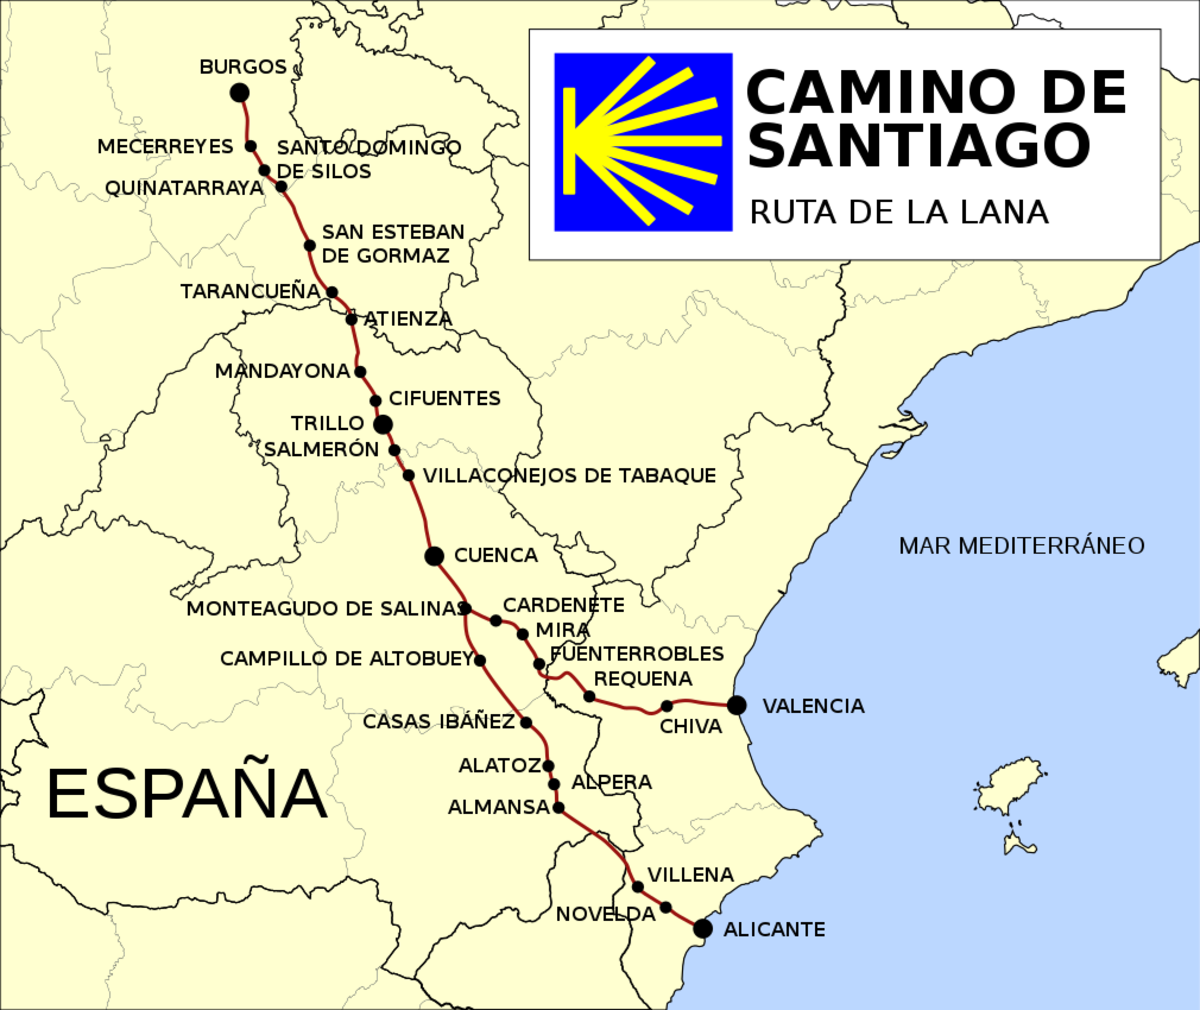 The Camino de Santiago Trail in Spain.